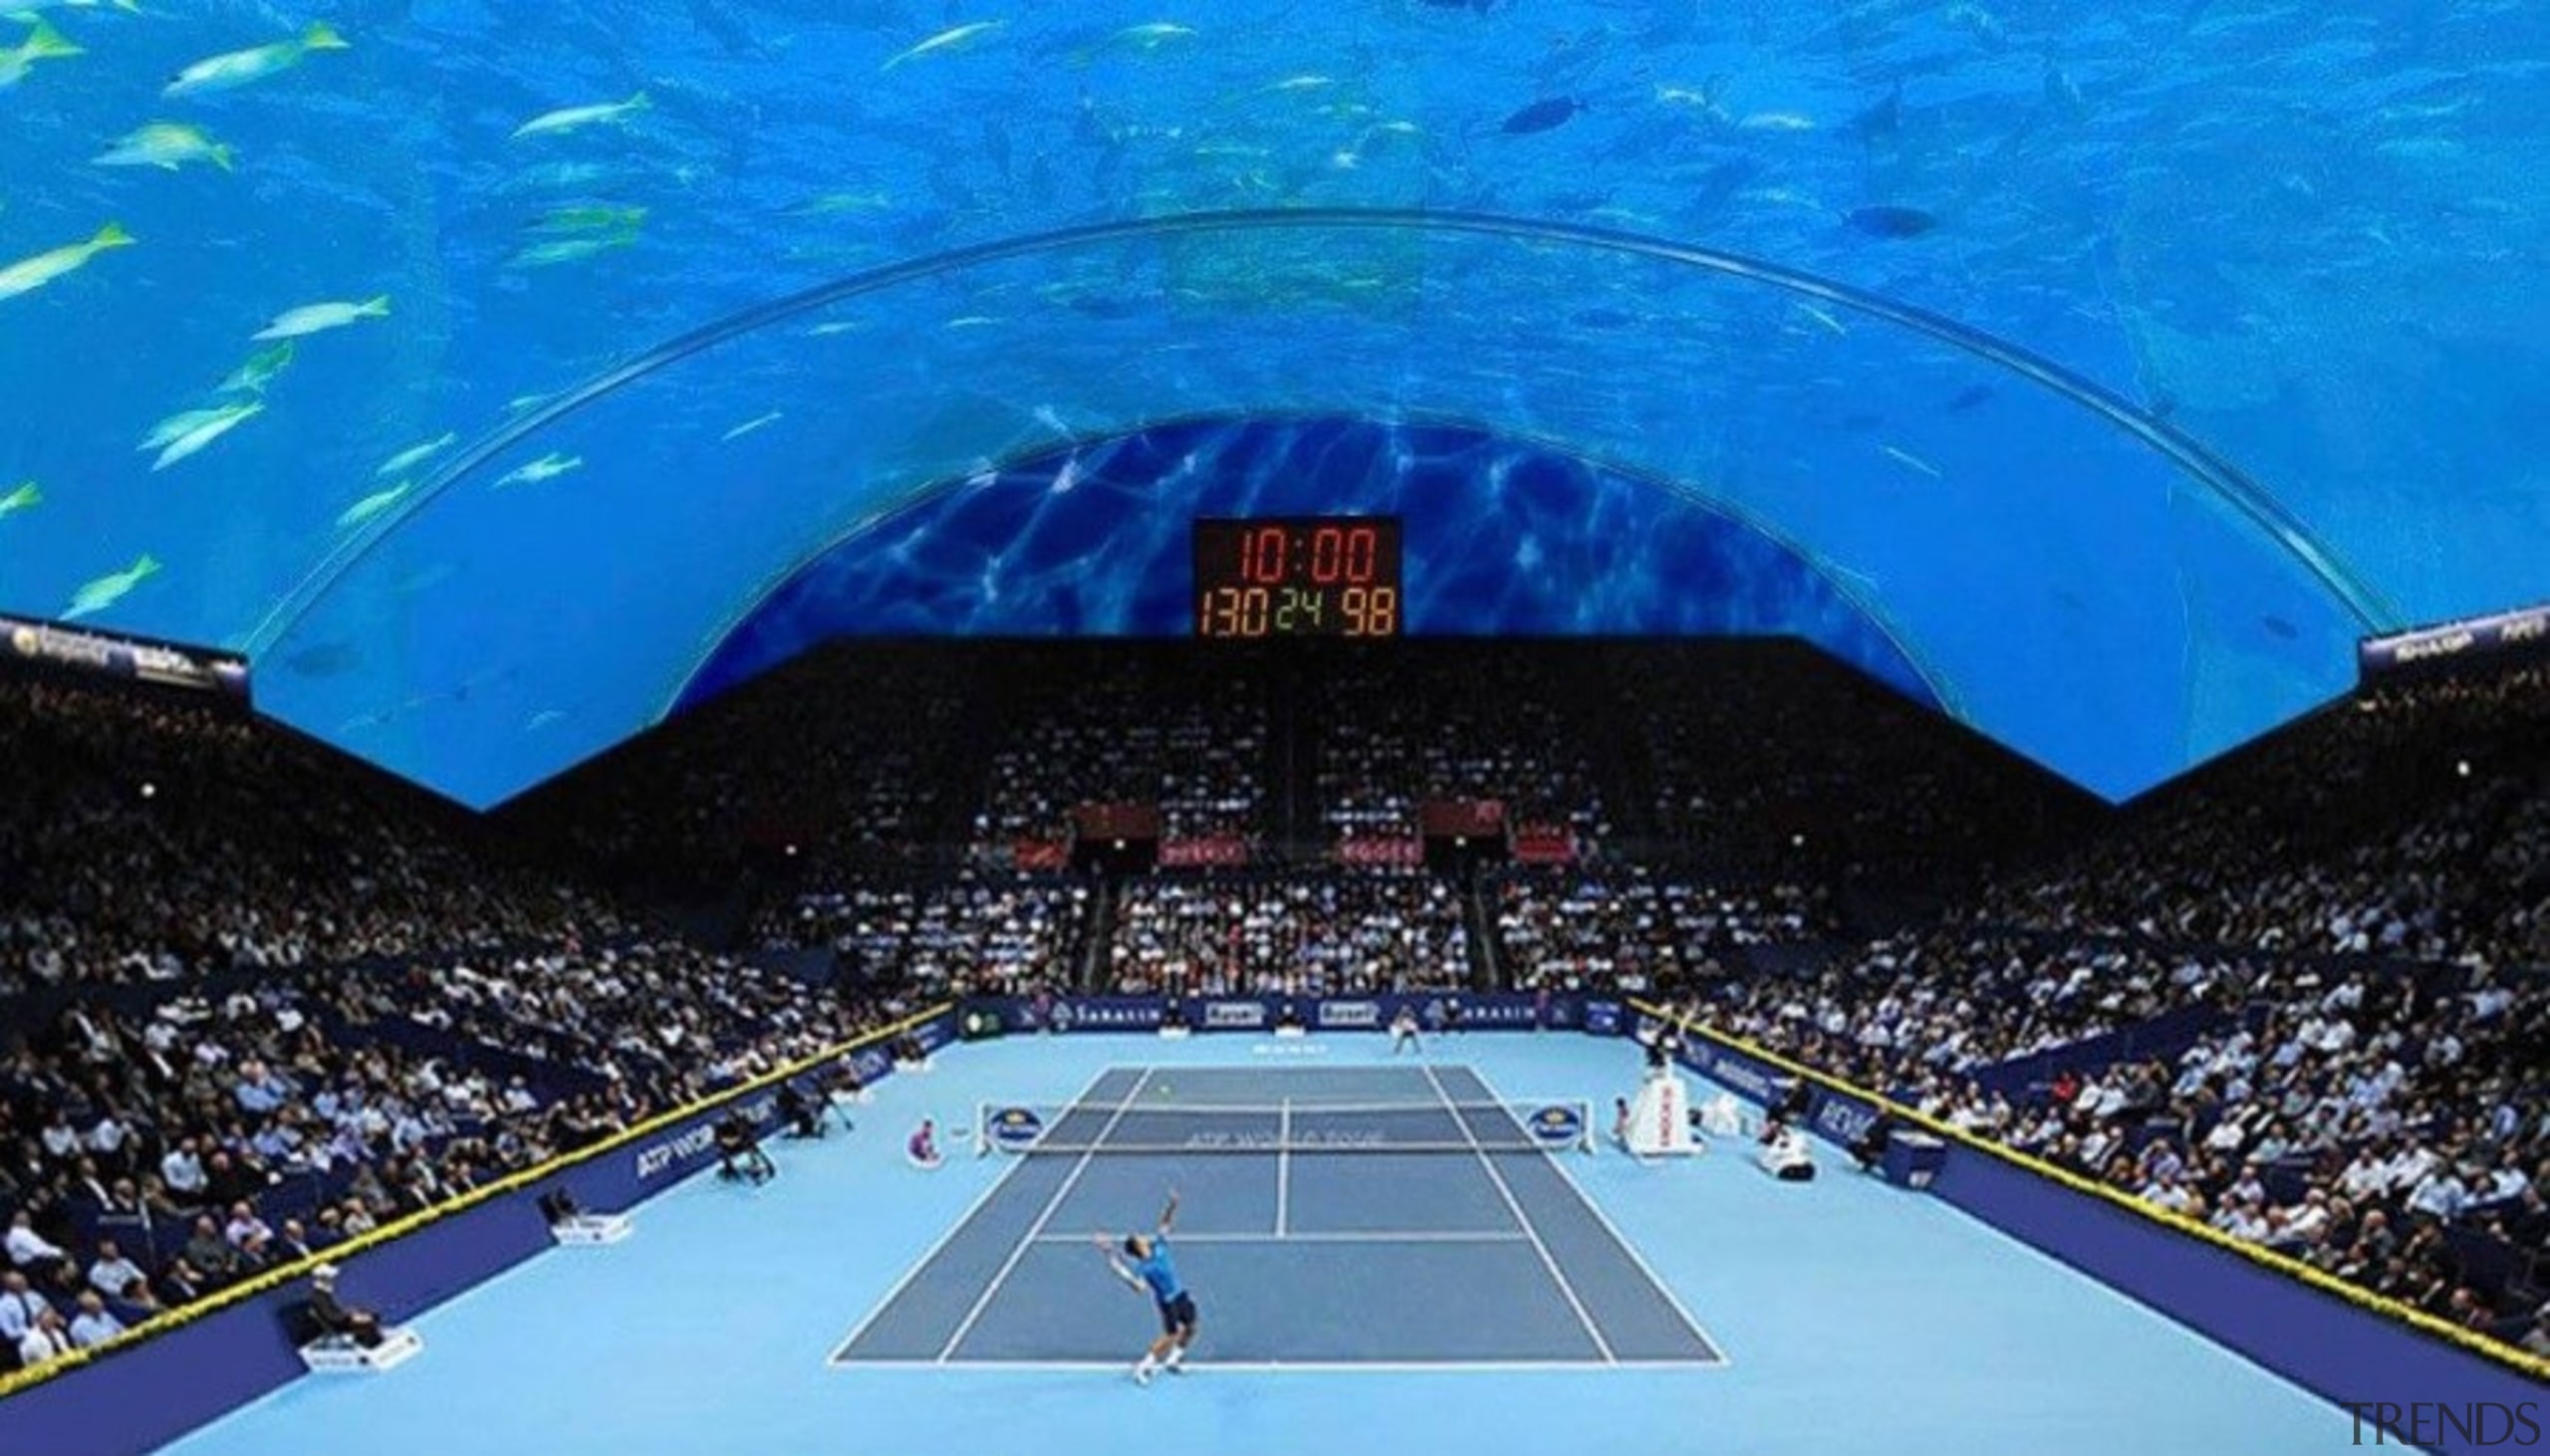 World's First Underwater Tennis Complex 06 - World's arena, competition event, leisure, sport venue, sports, structure, world, blue